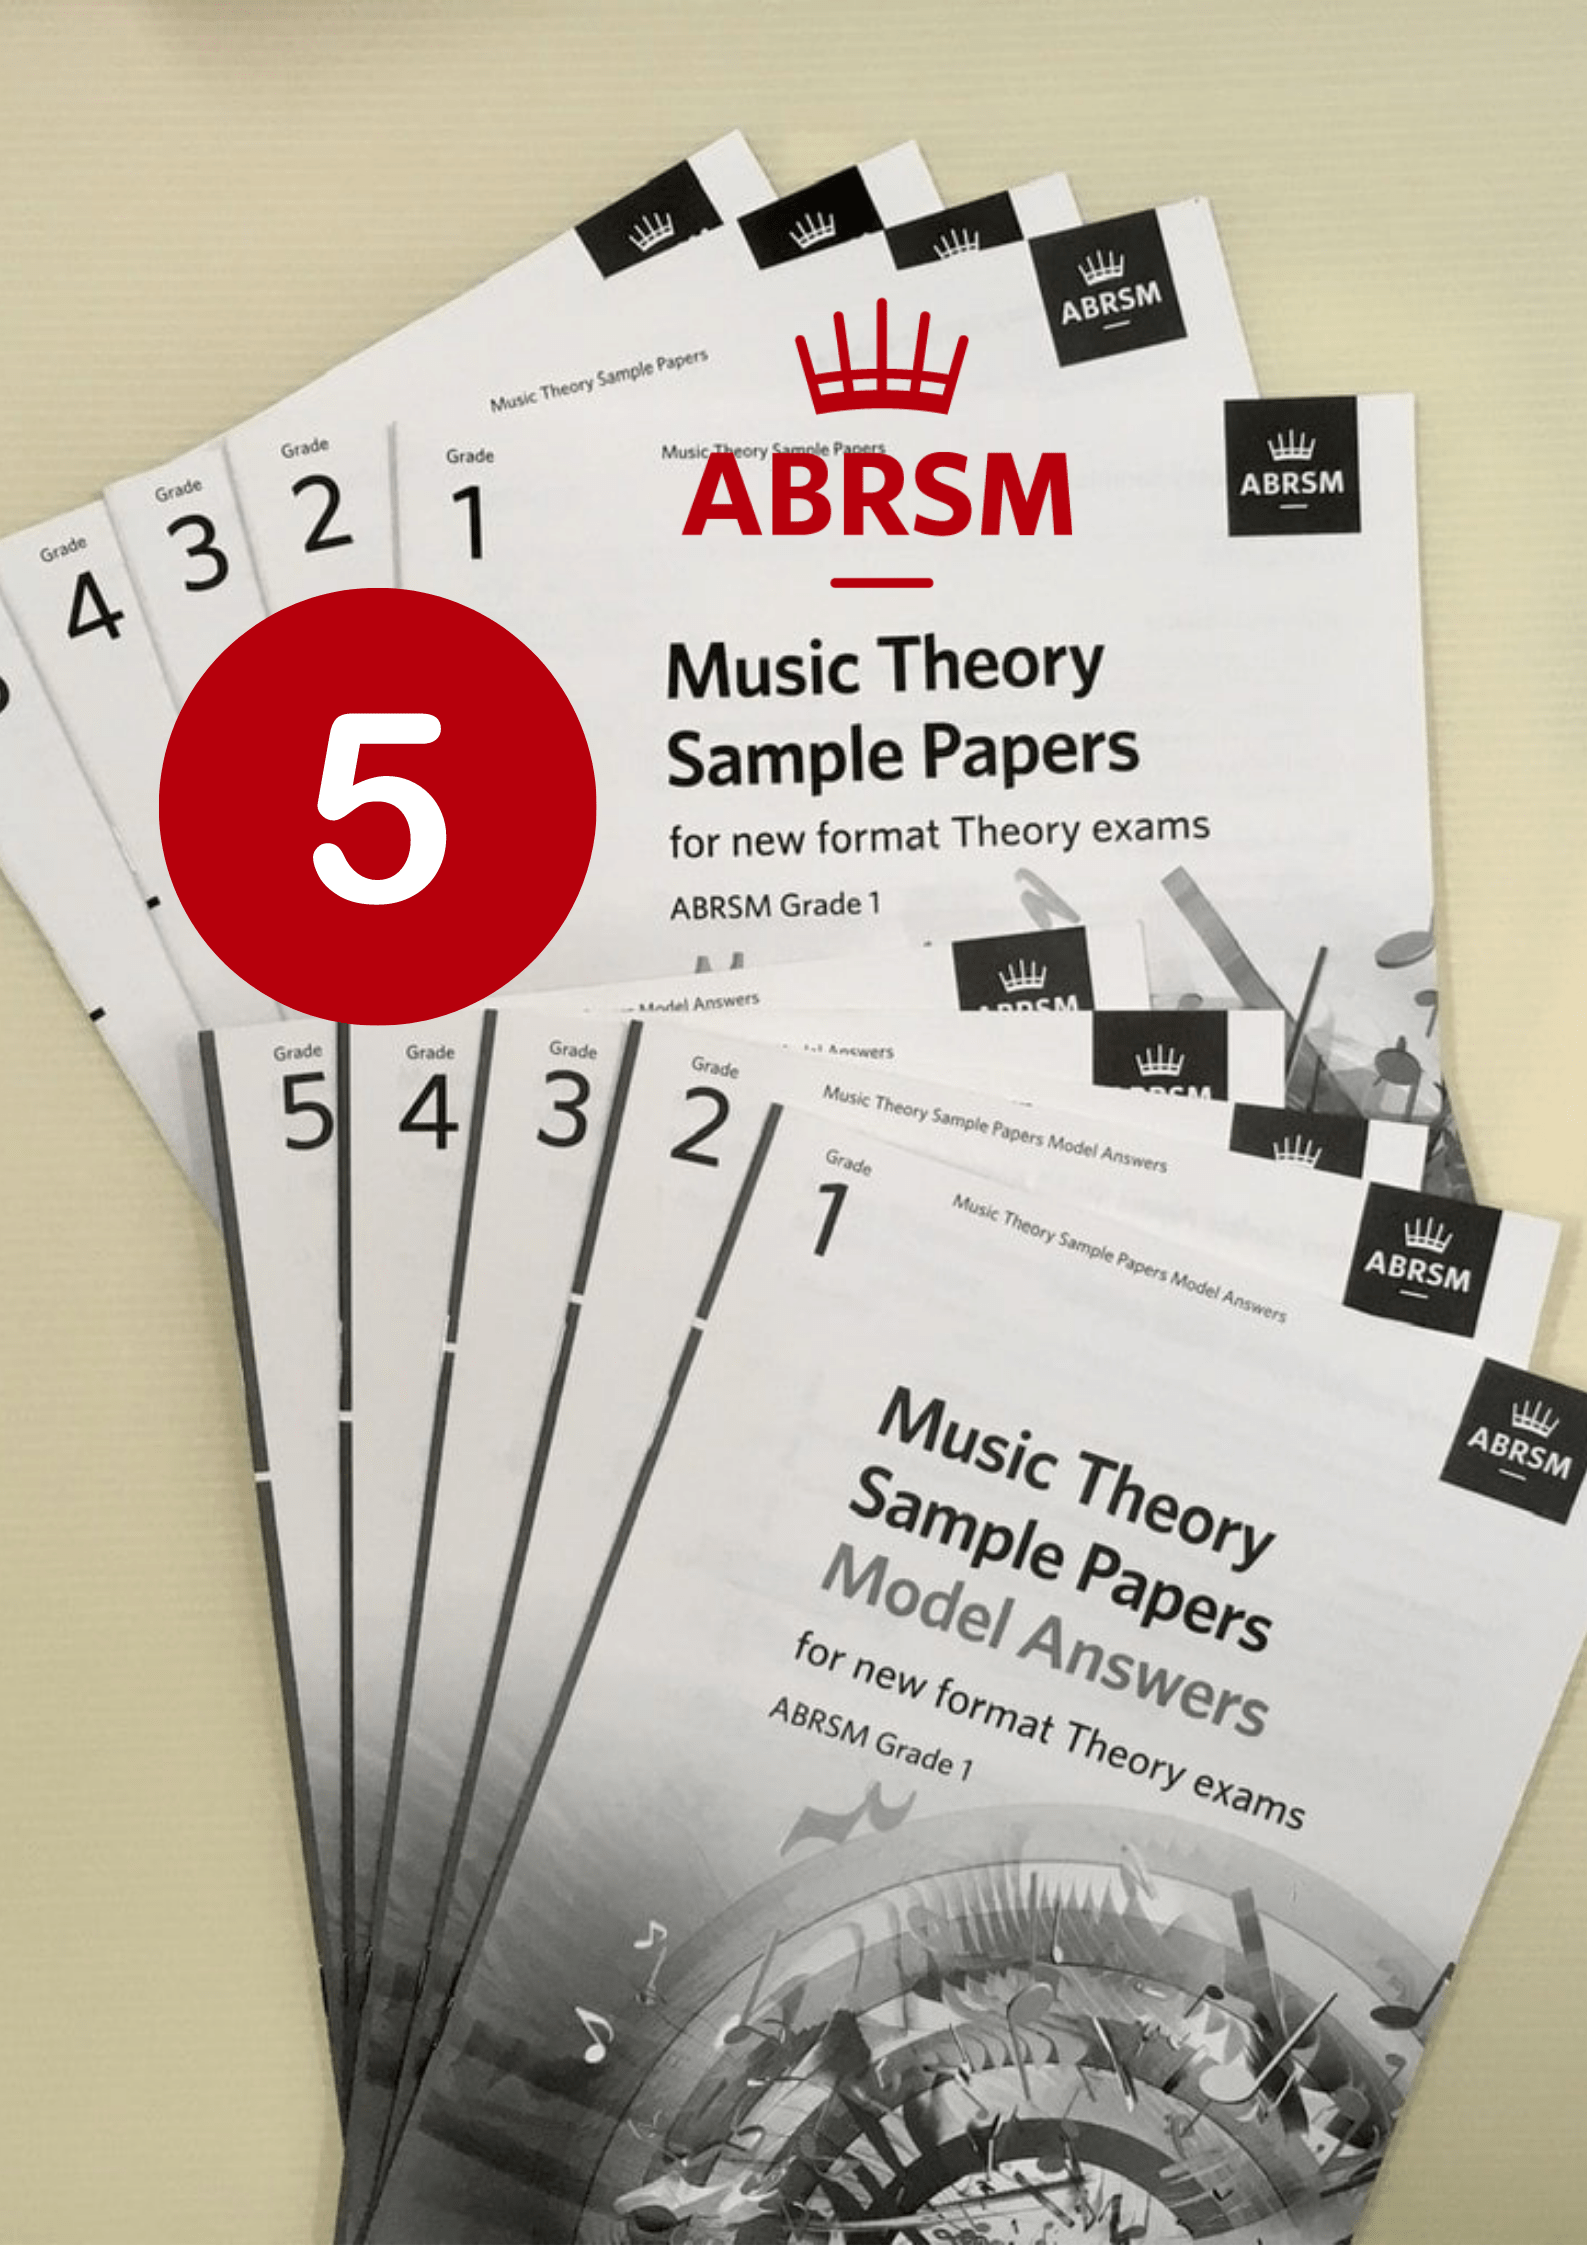 نمونه سوالات تئوری موسیقی گرید ۵ ABRSM